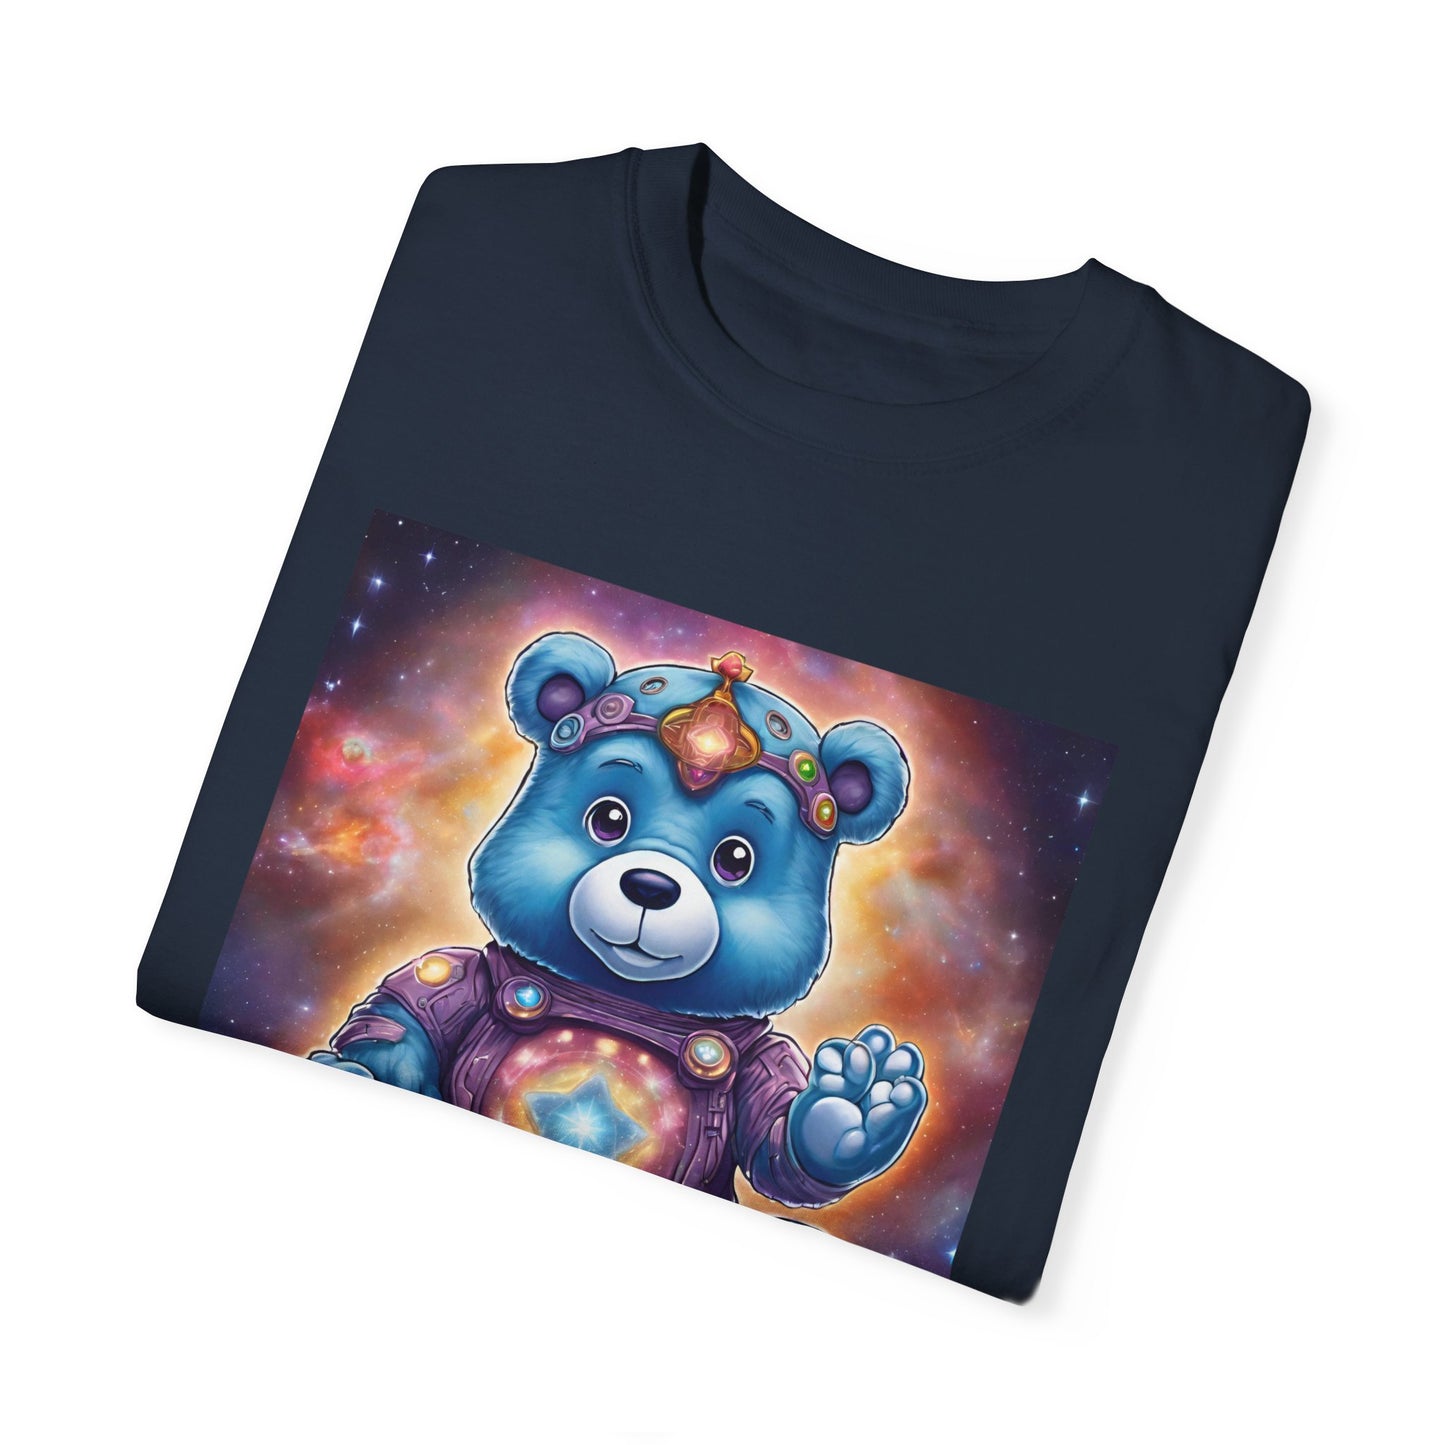 Unisex Galactic Starseed Garment-Dyed T-shirt